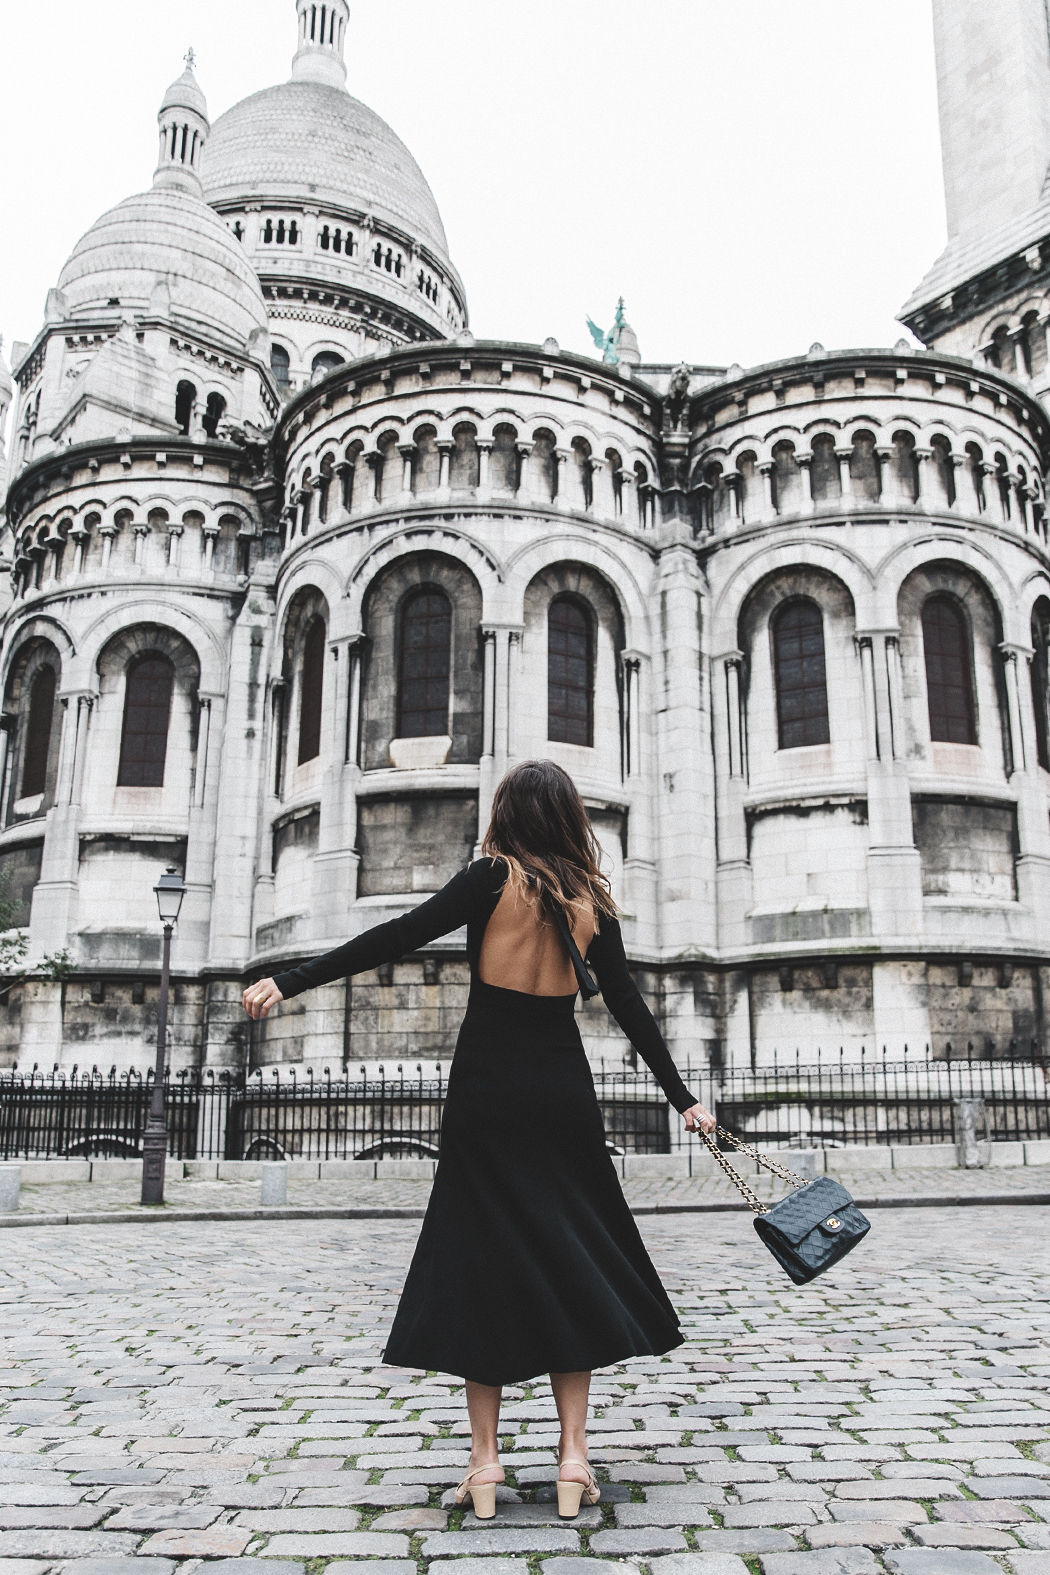 Backless_Dress-Black_Dress-Chanel_Shoes-Paris-PFW-Paris_Fashion_Week_Fall_2016-5